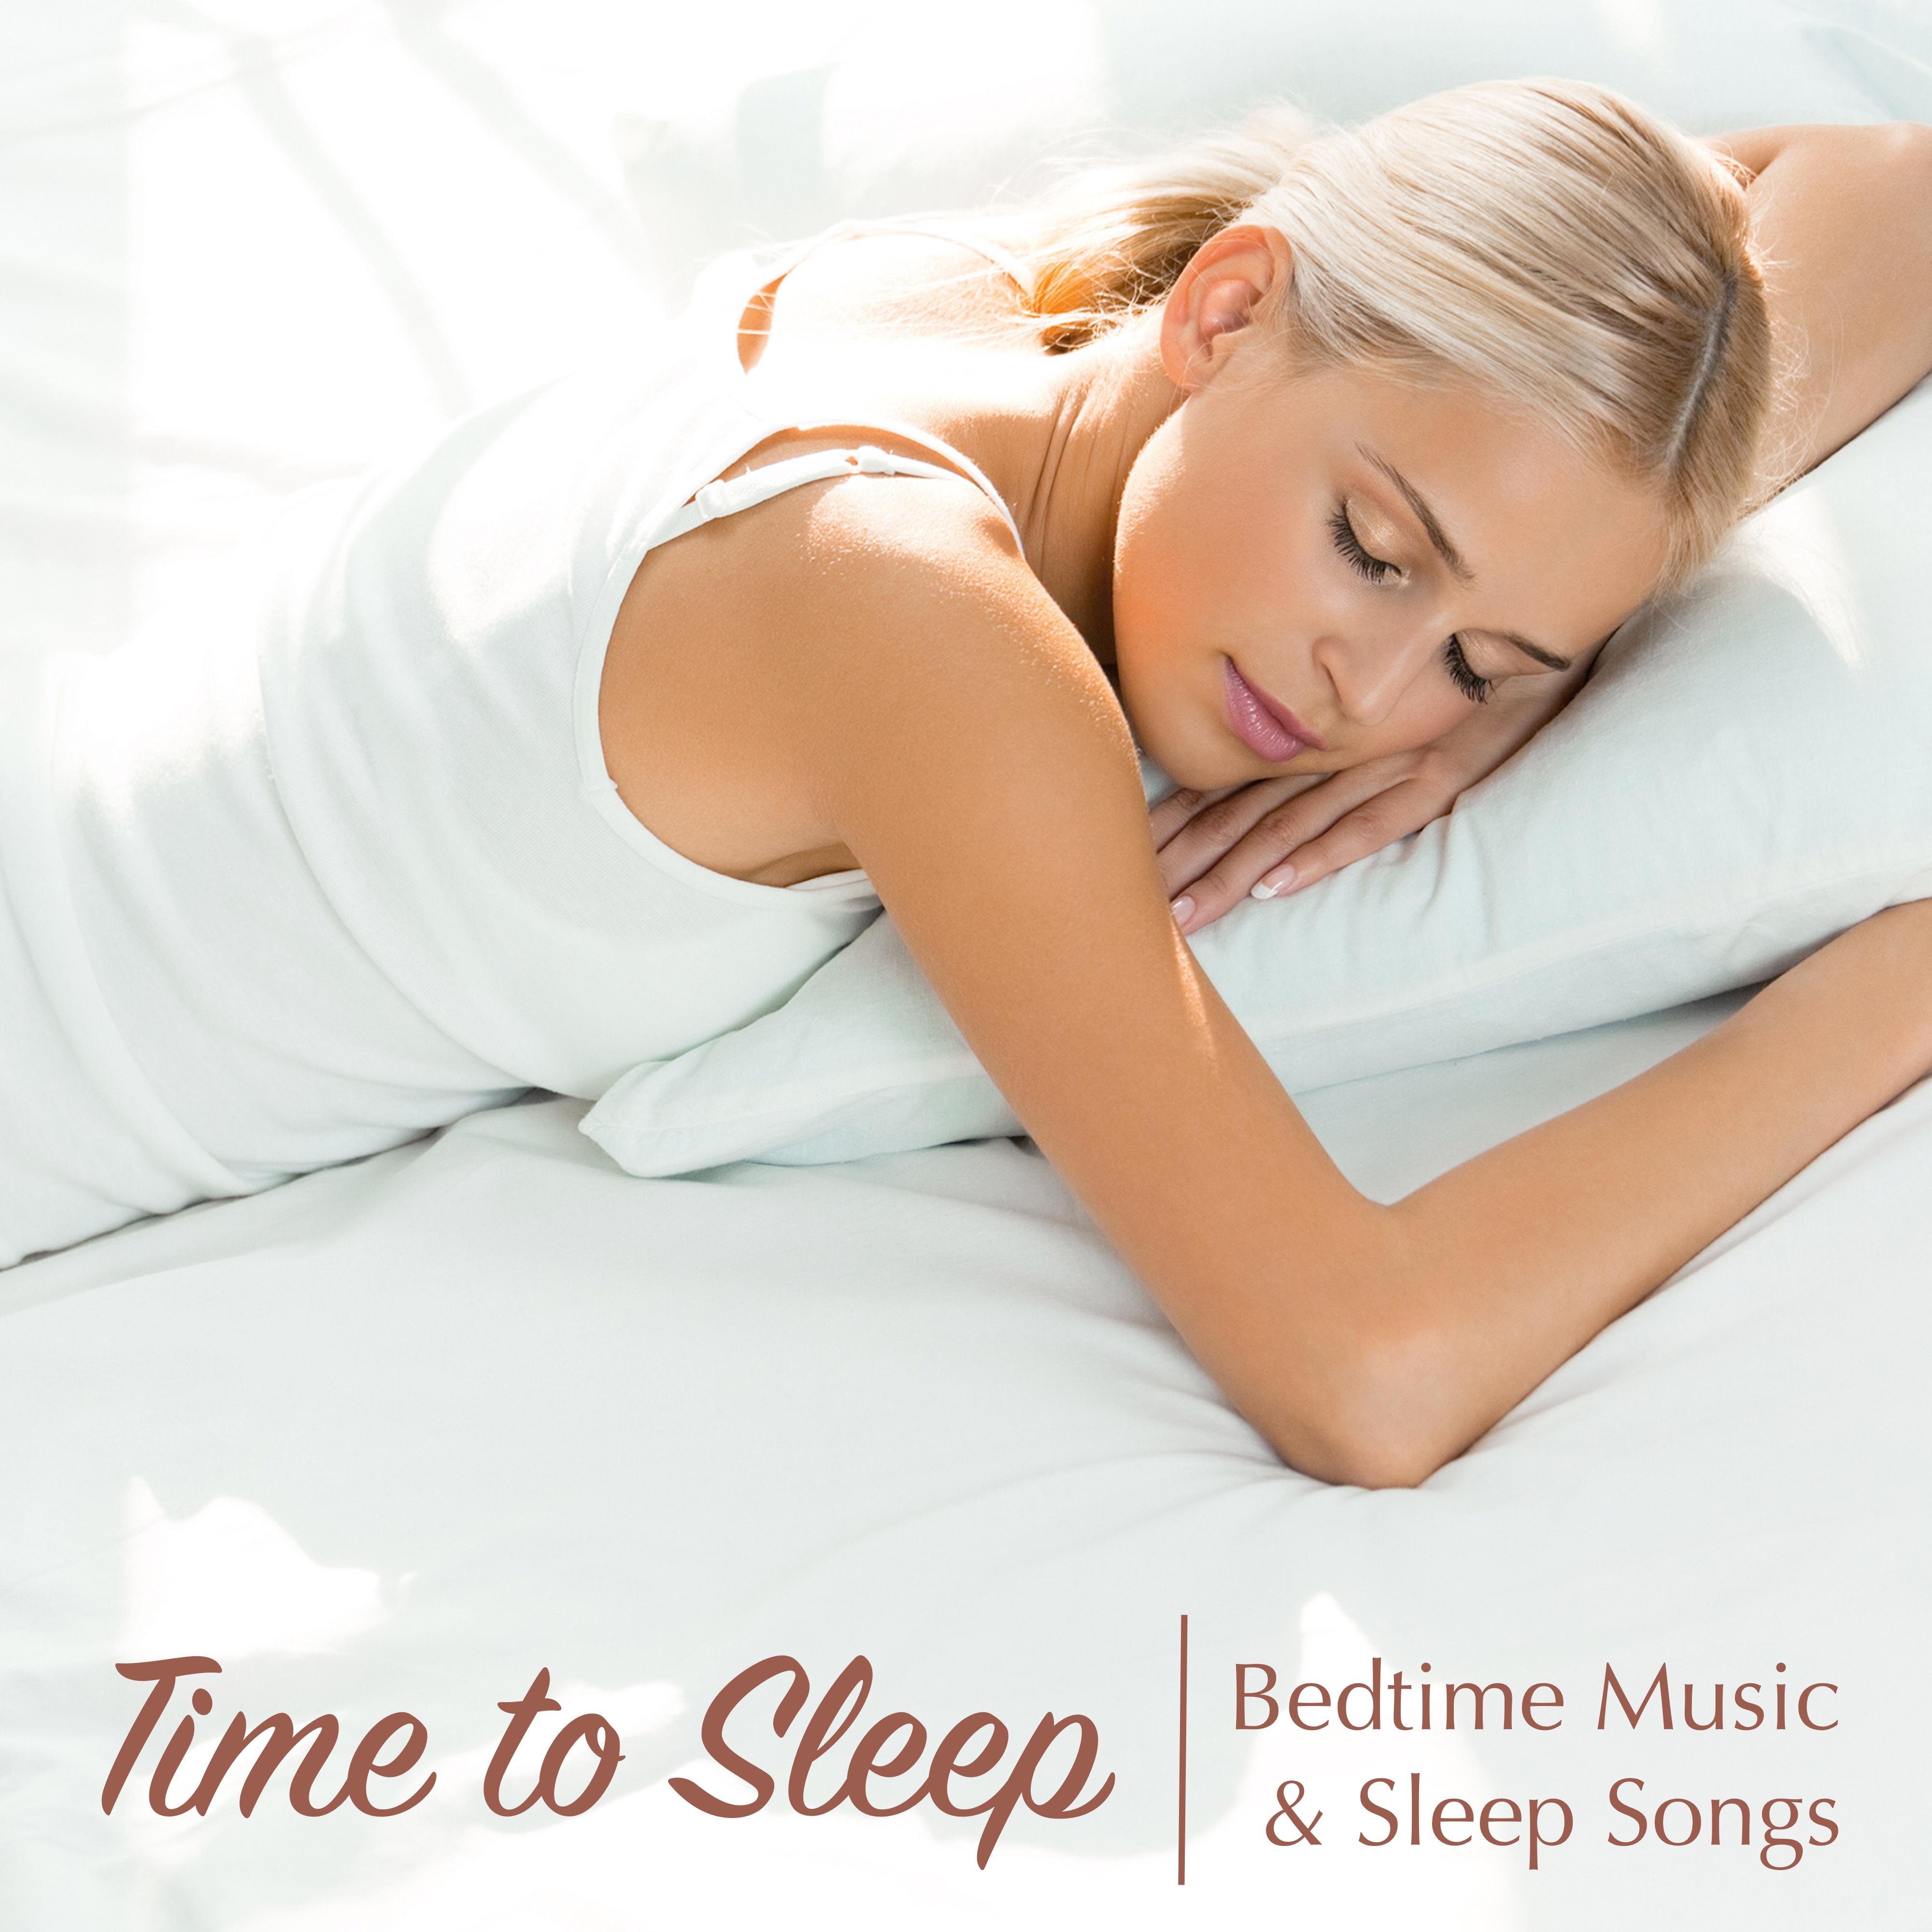 Sleeping Song to Help You Sleep - Natural Aid